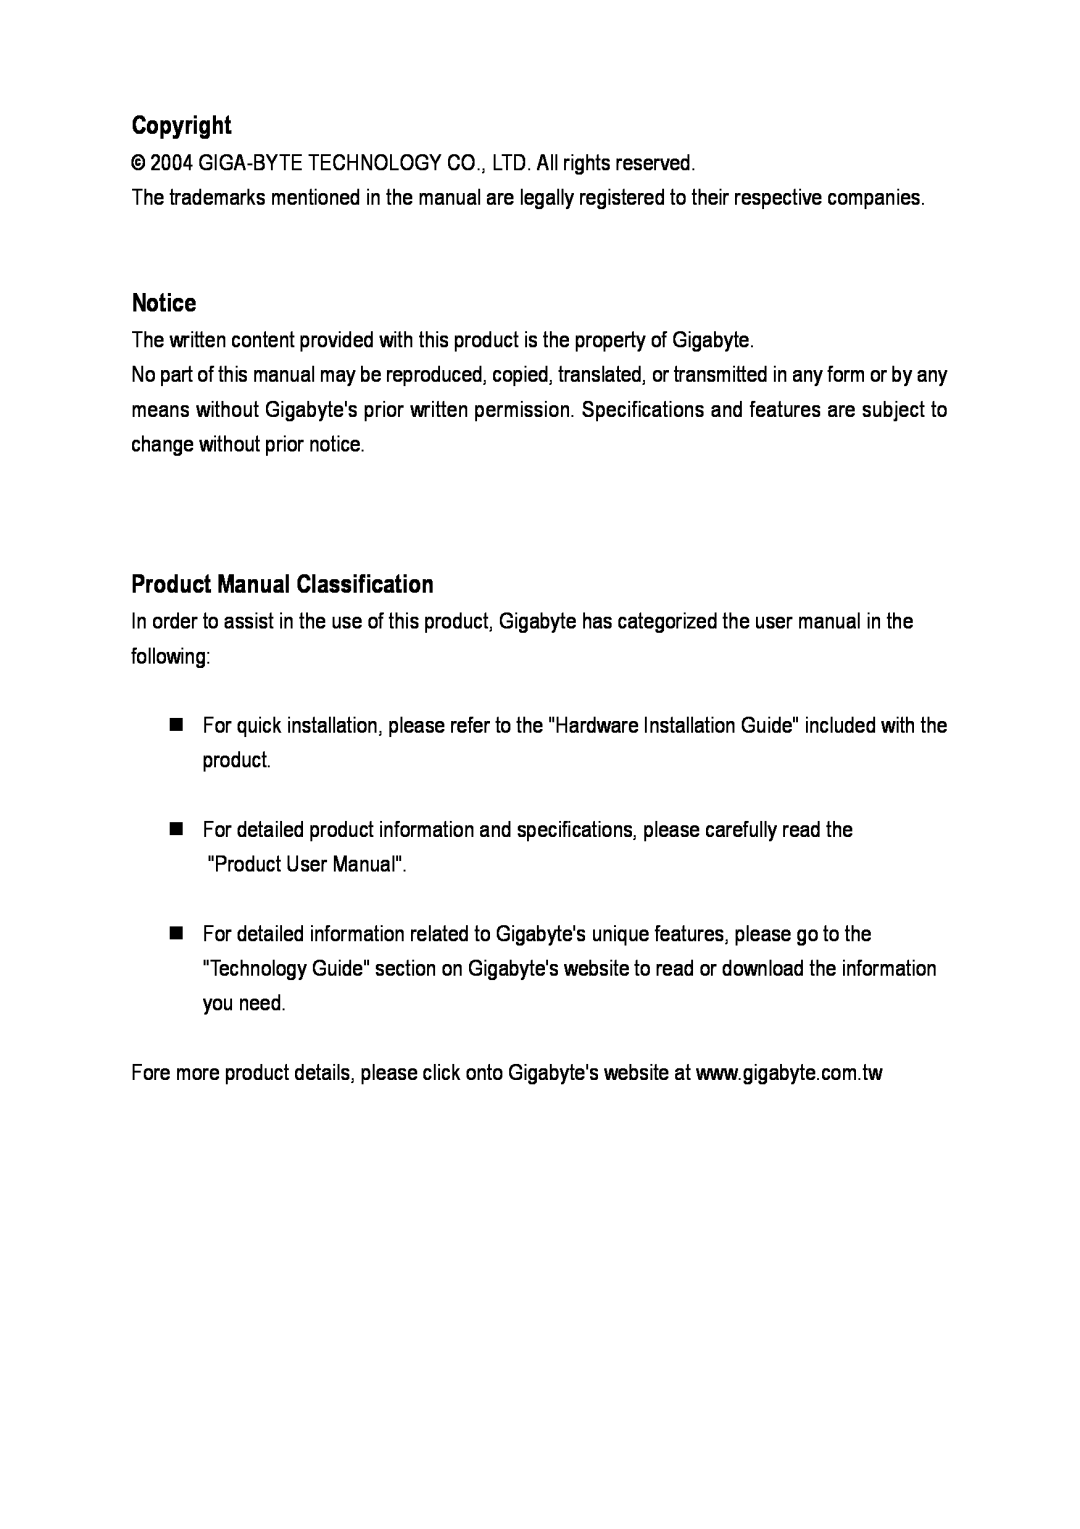 Gigabyte GA-7N400S-L user manual Copyright, Product Manual Classification 